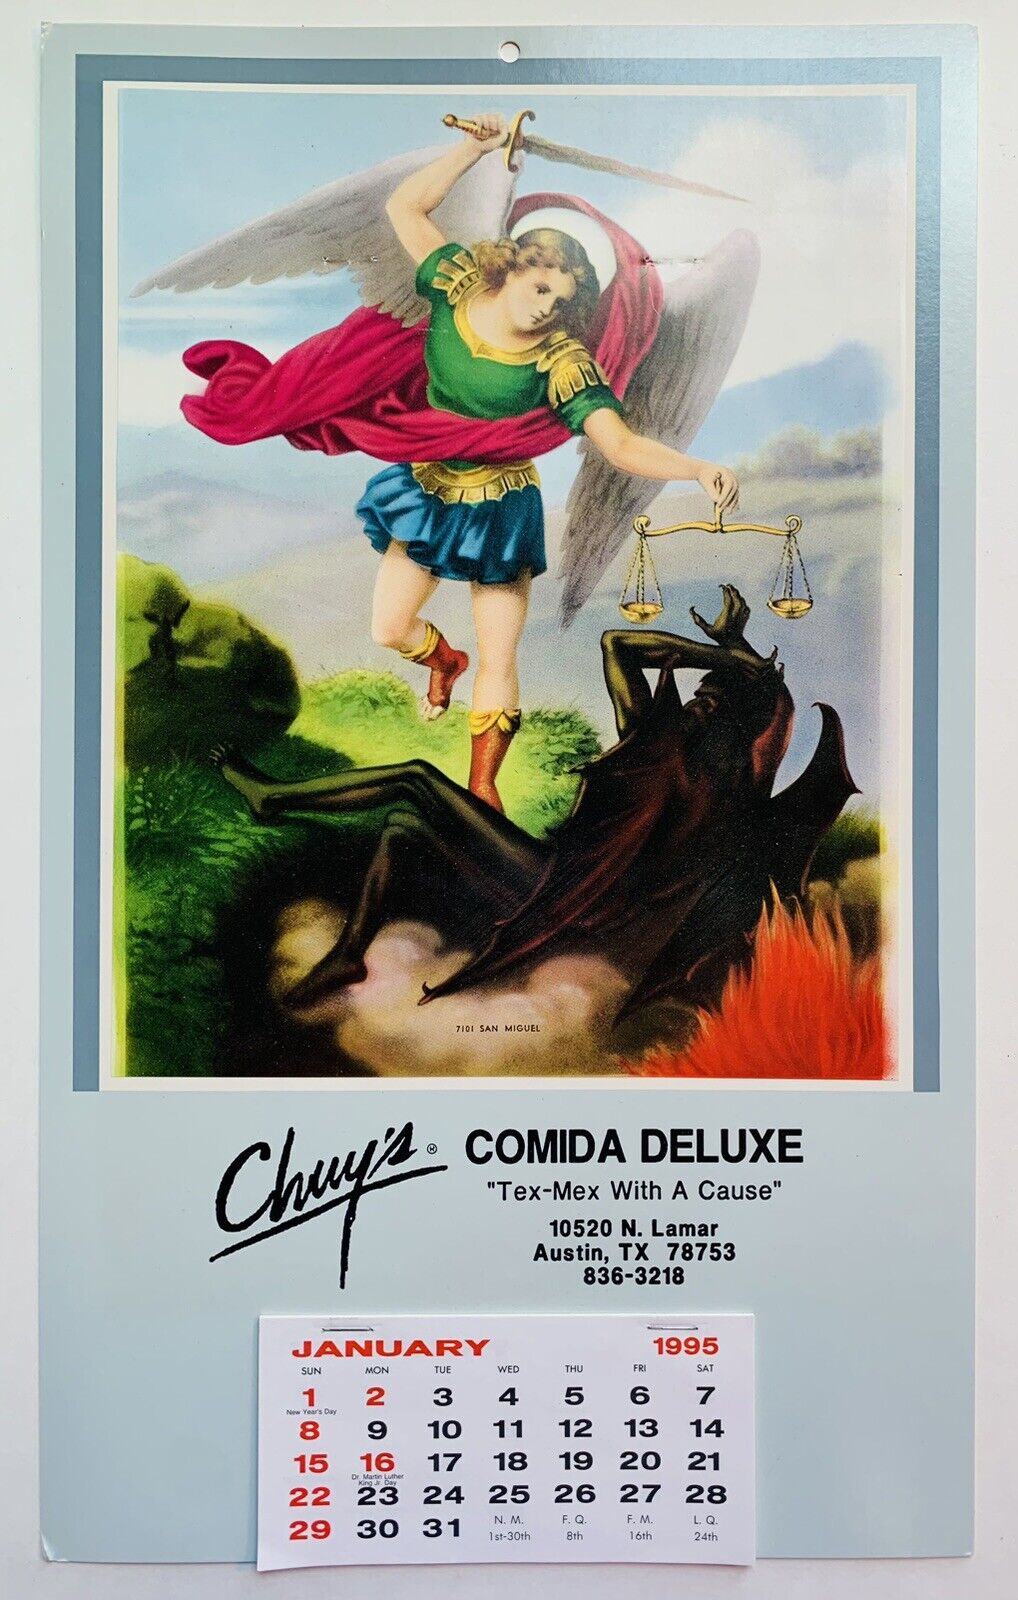 Vintage 1995 Calendar: CHUY'S Comida Deluxe - Tex-Mex - Austin, Texas